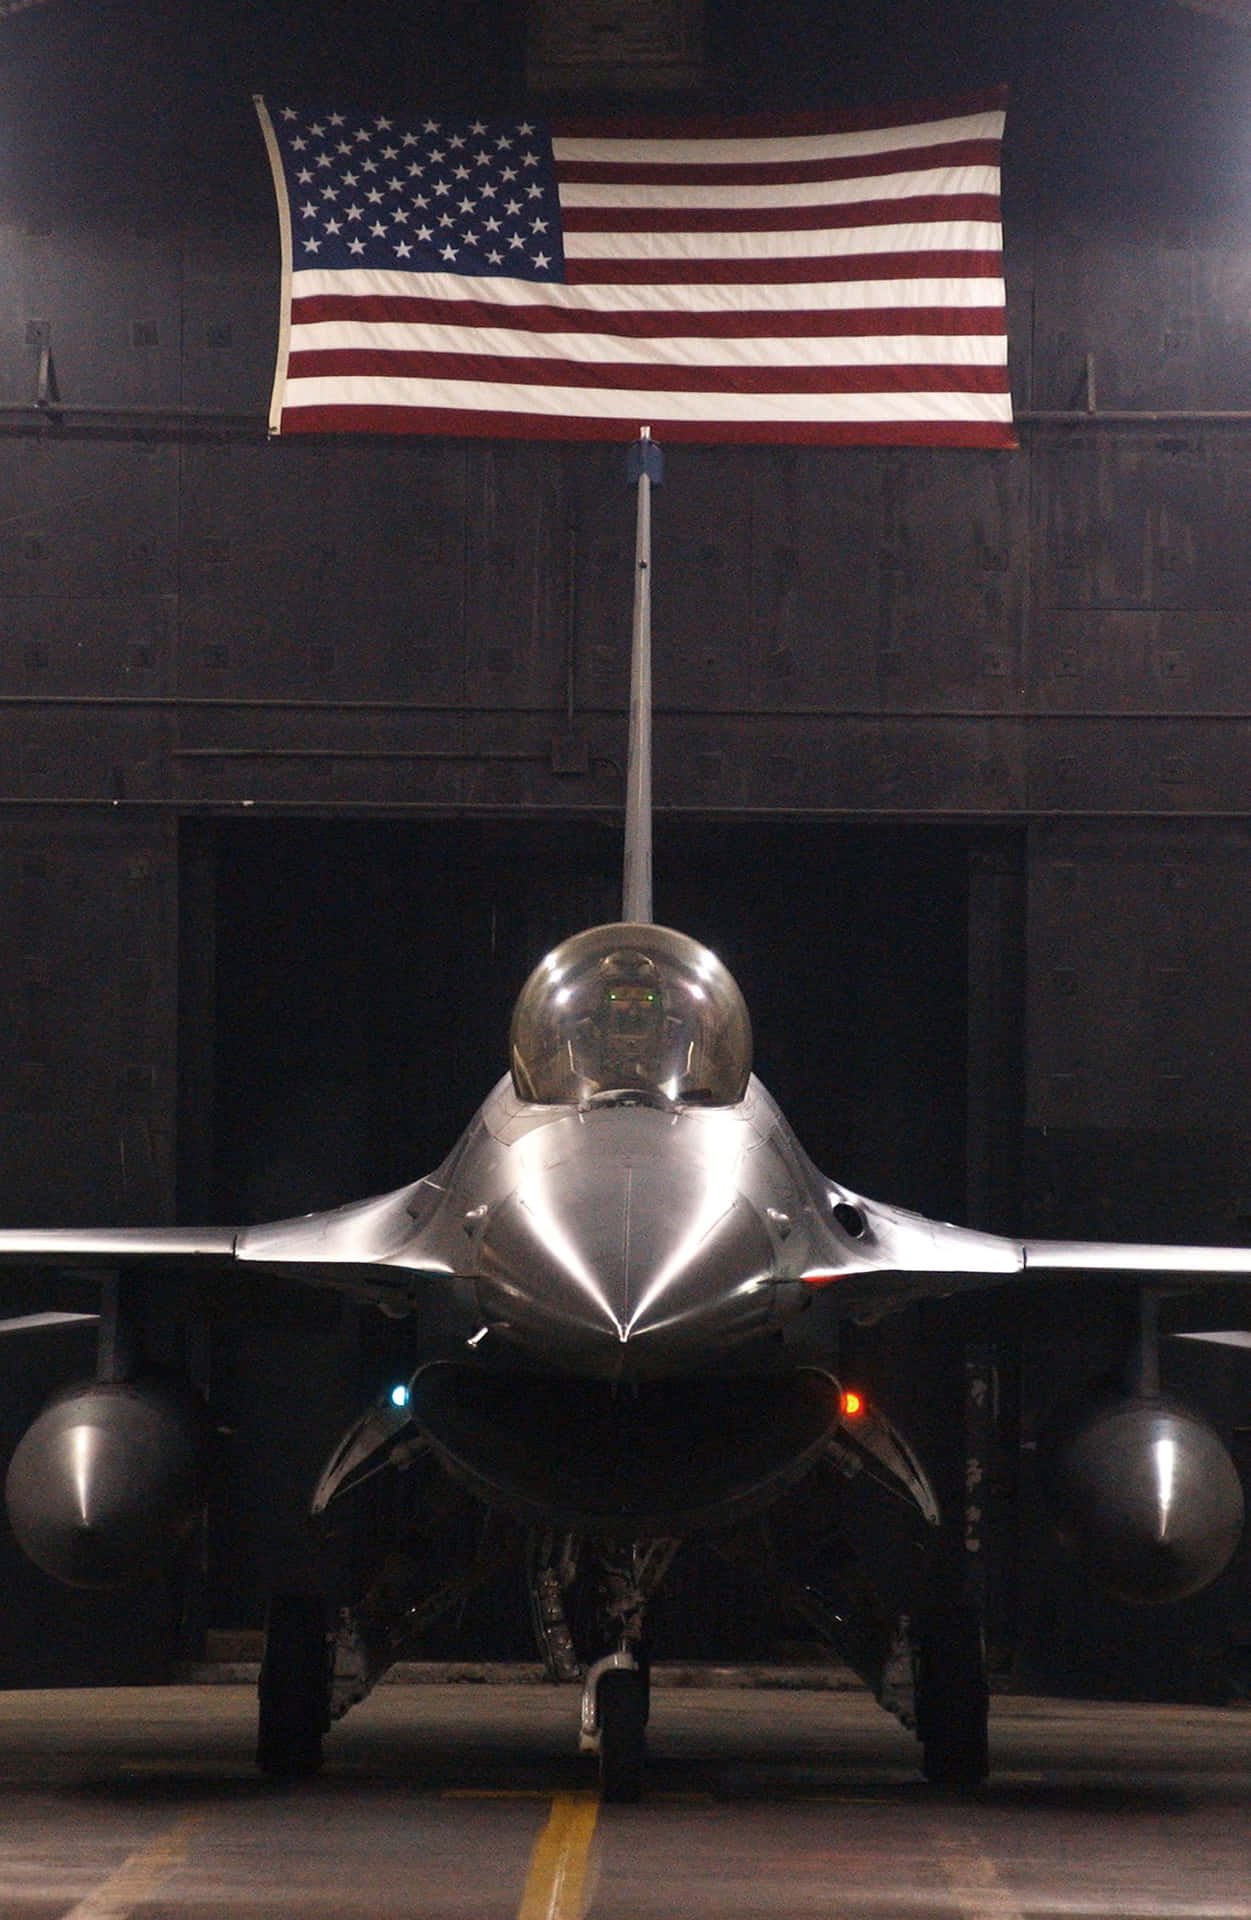 Patriotic Military General Dynamics F 16 Fighting Falcon Wallpaper